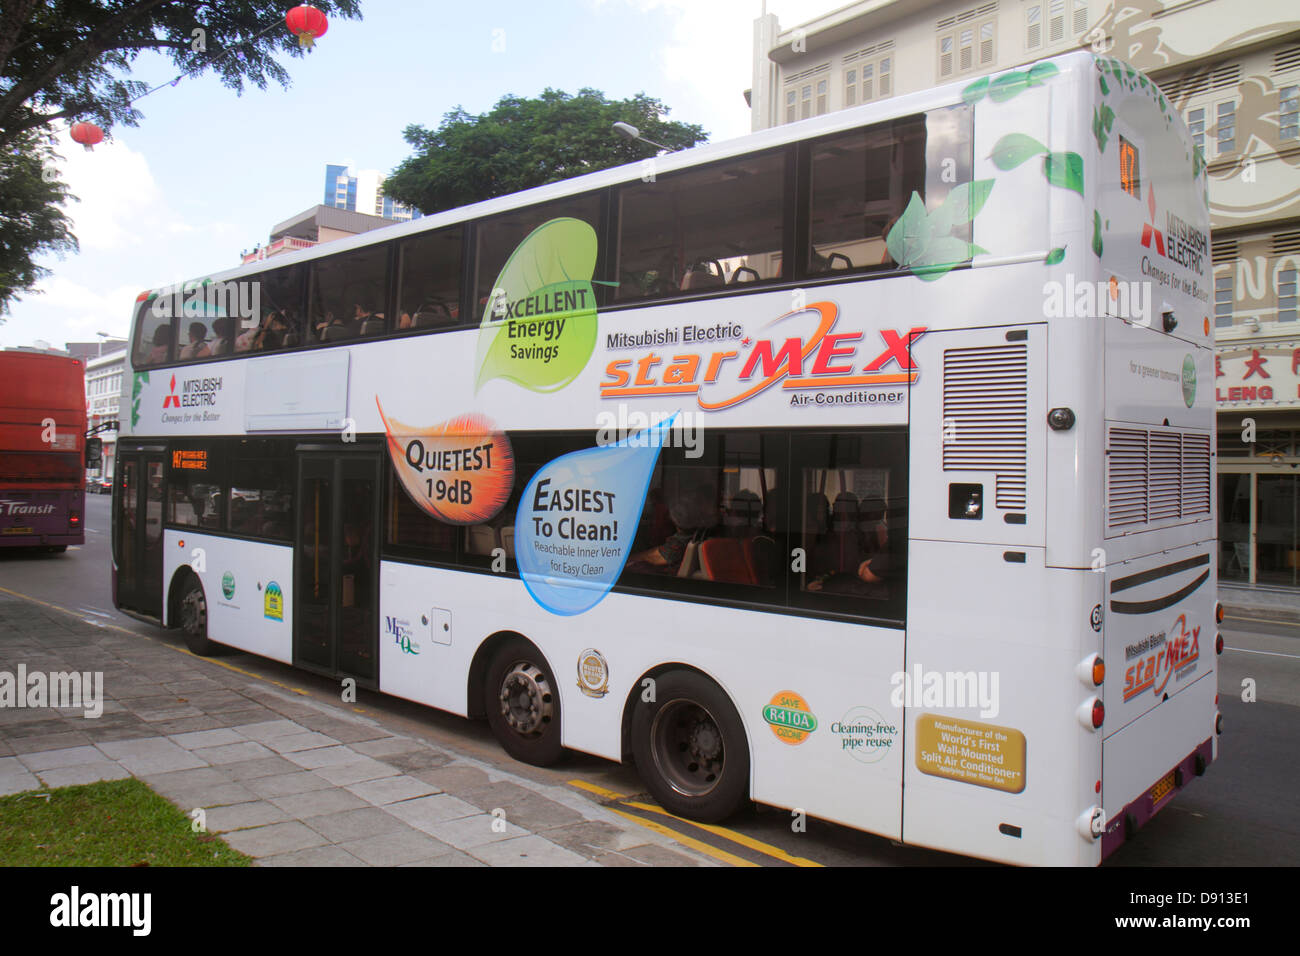 Singapore,Jalan Besar,double-decker,coach,bus,coach,Mitsubishi Electric,visitors travel traveling tour tourist tourism landmark,vacation international Stock Photo